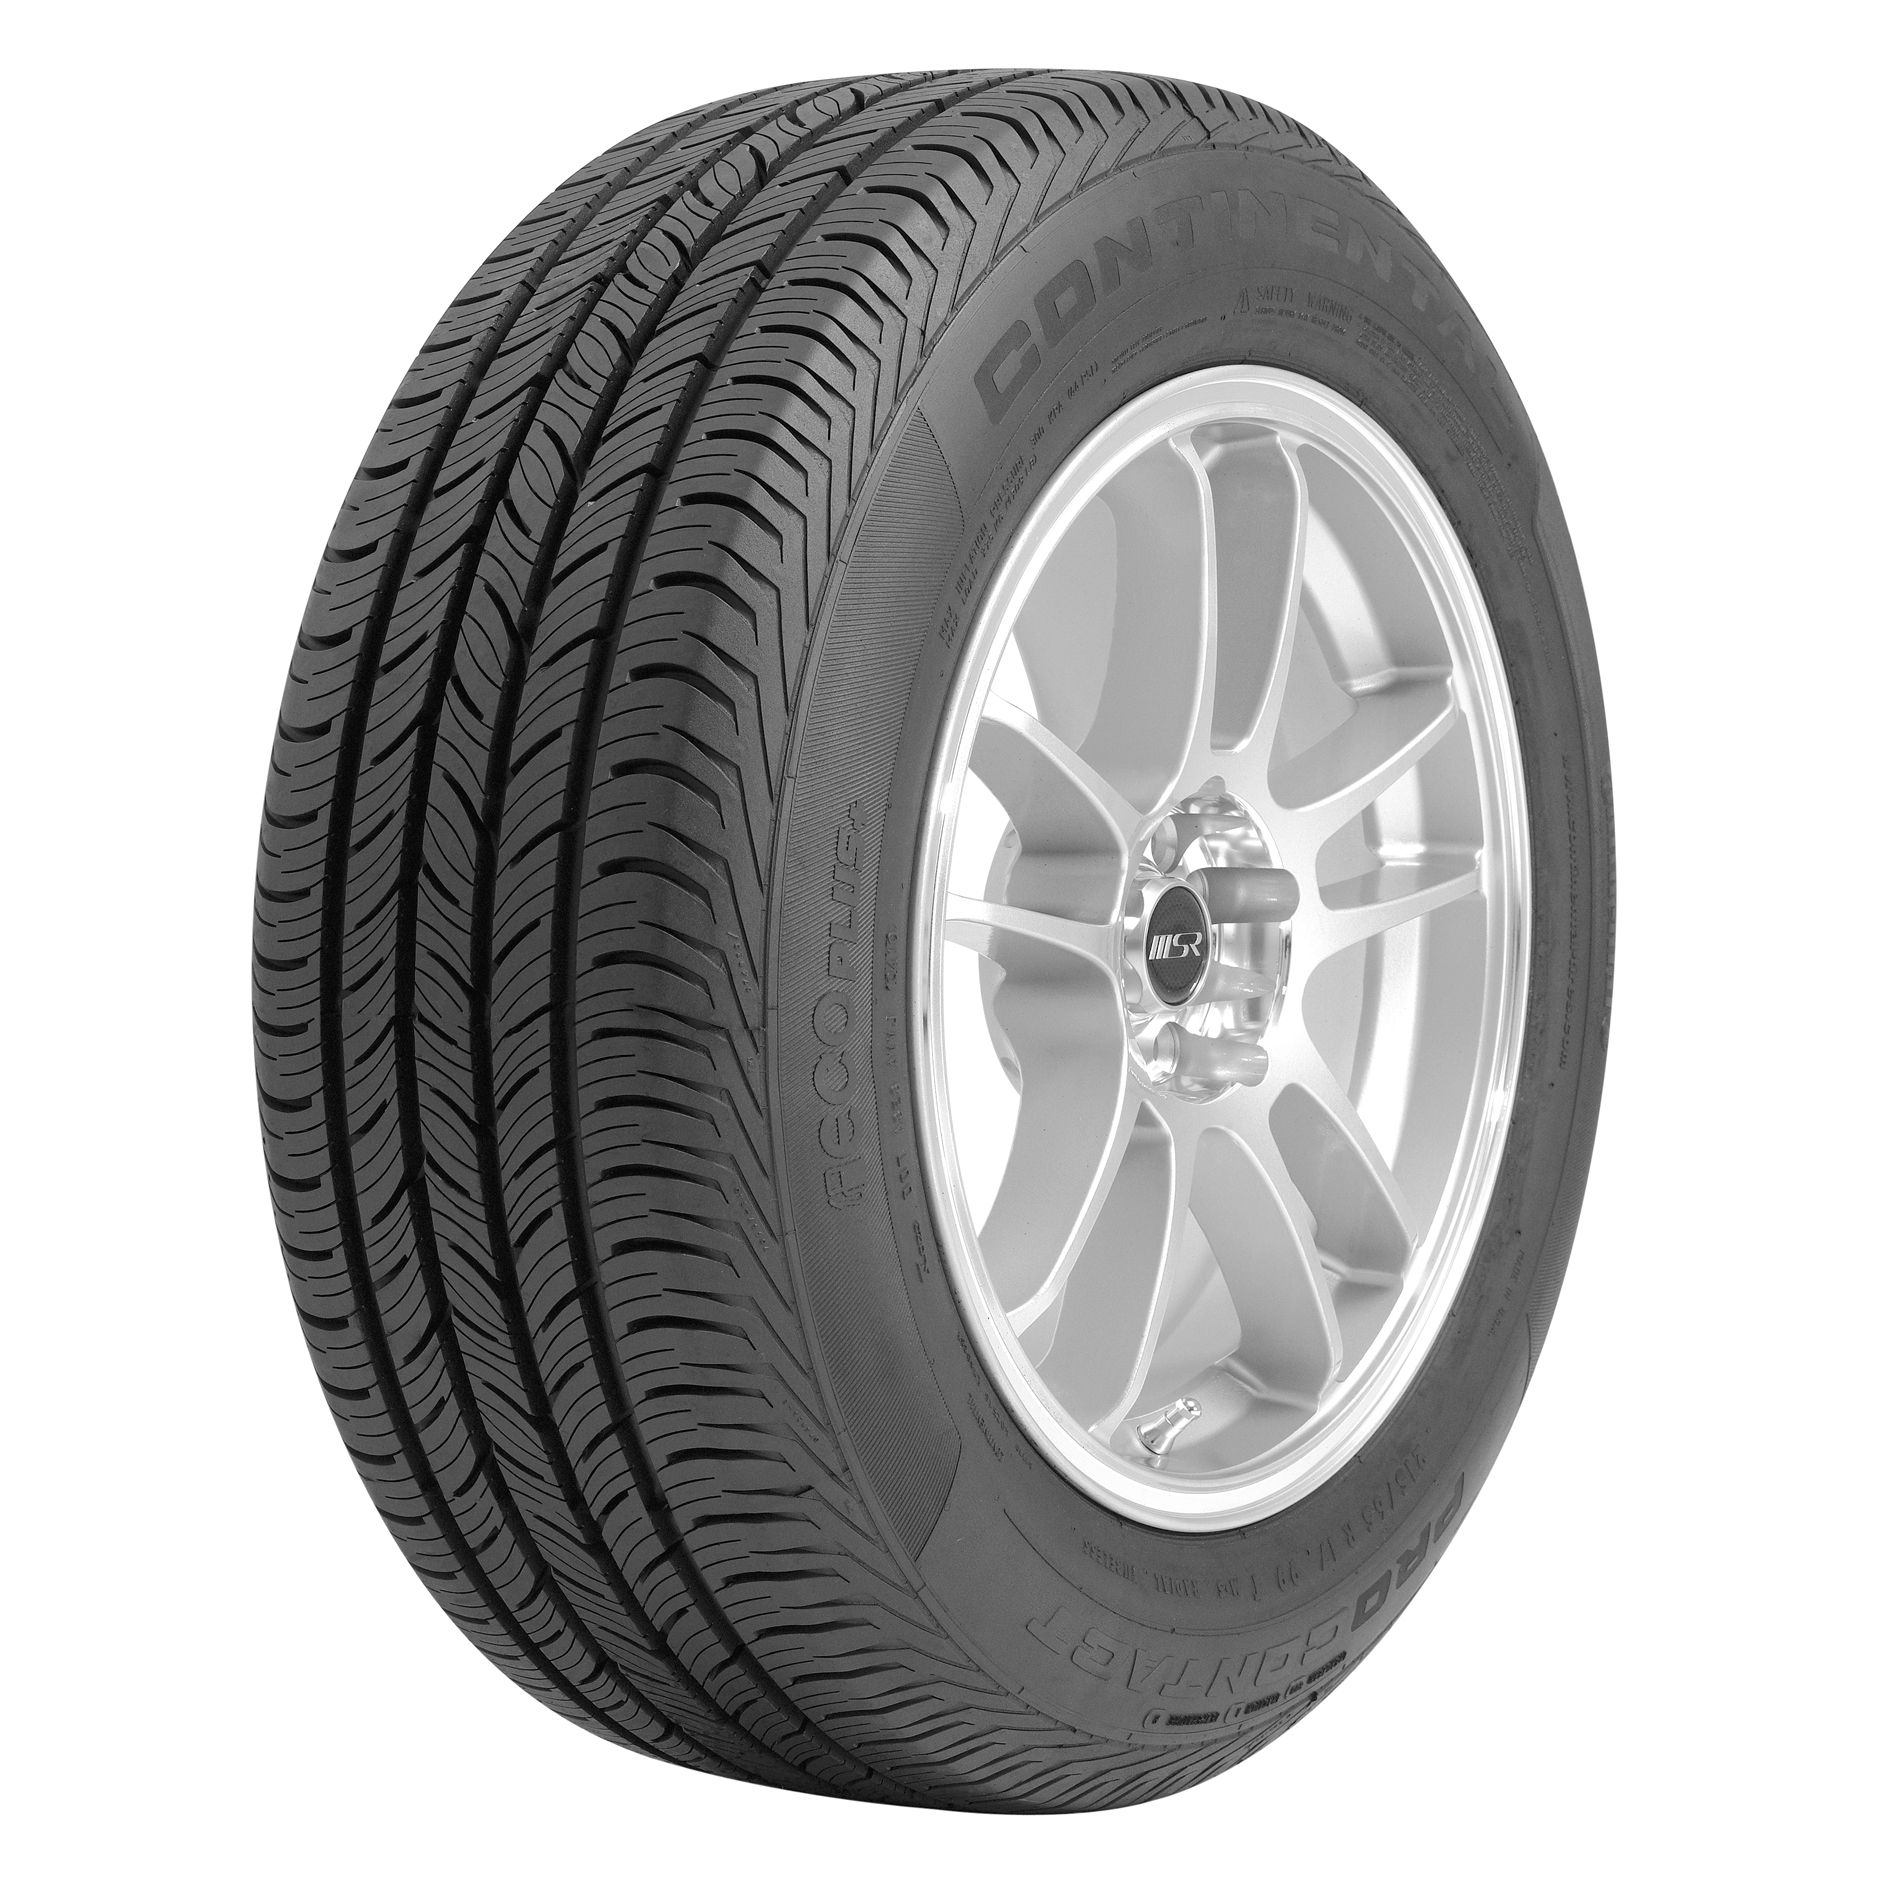 Continental Pro Contact Eco Plus - 225/55R17 97T BW - All-Season Tire